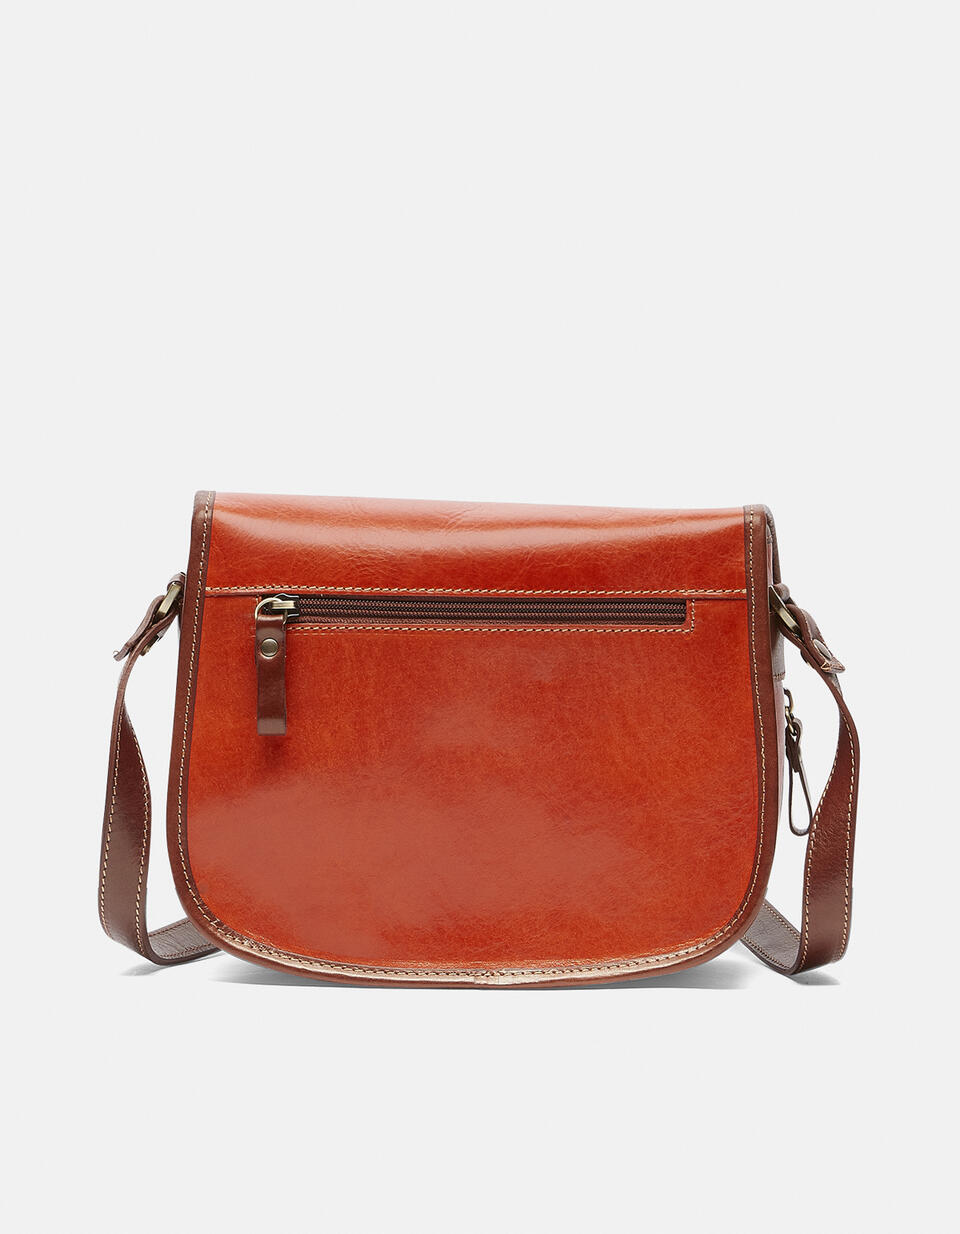 Leather Messenger bag - Messenger Bags - WOMEN'S BAGS | bags ARANCIOBICOLORE - Messenger Bags - WOMEN'S BAGS | bagsCuoieria Fiorentina